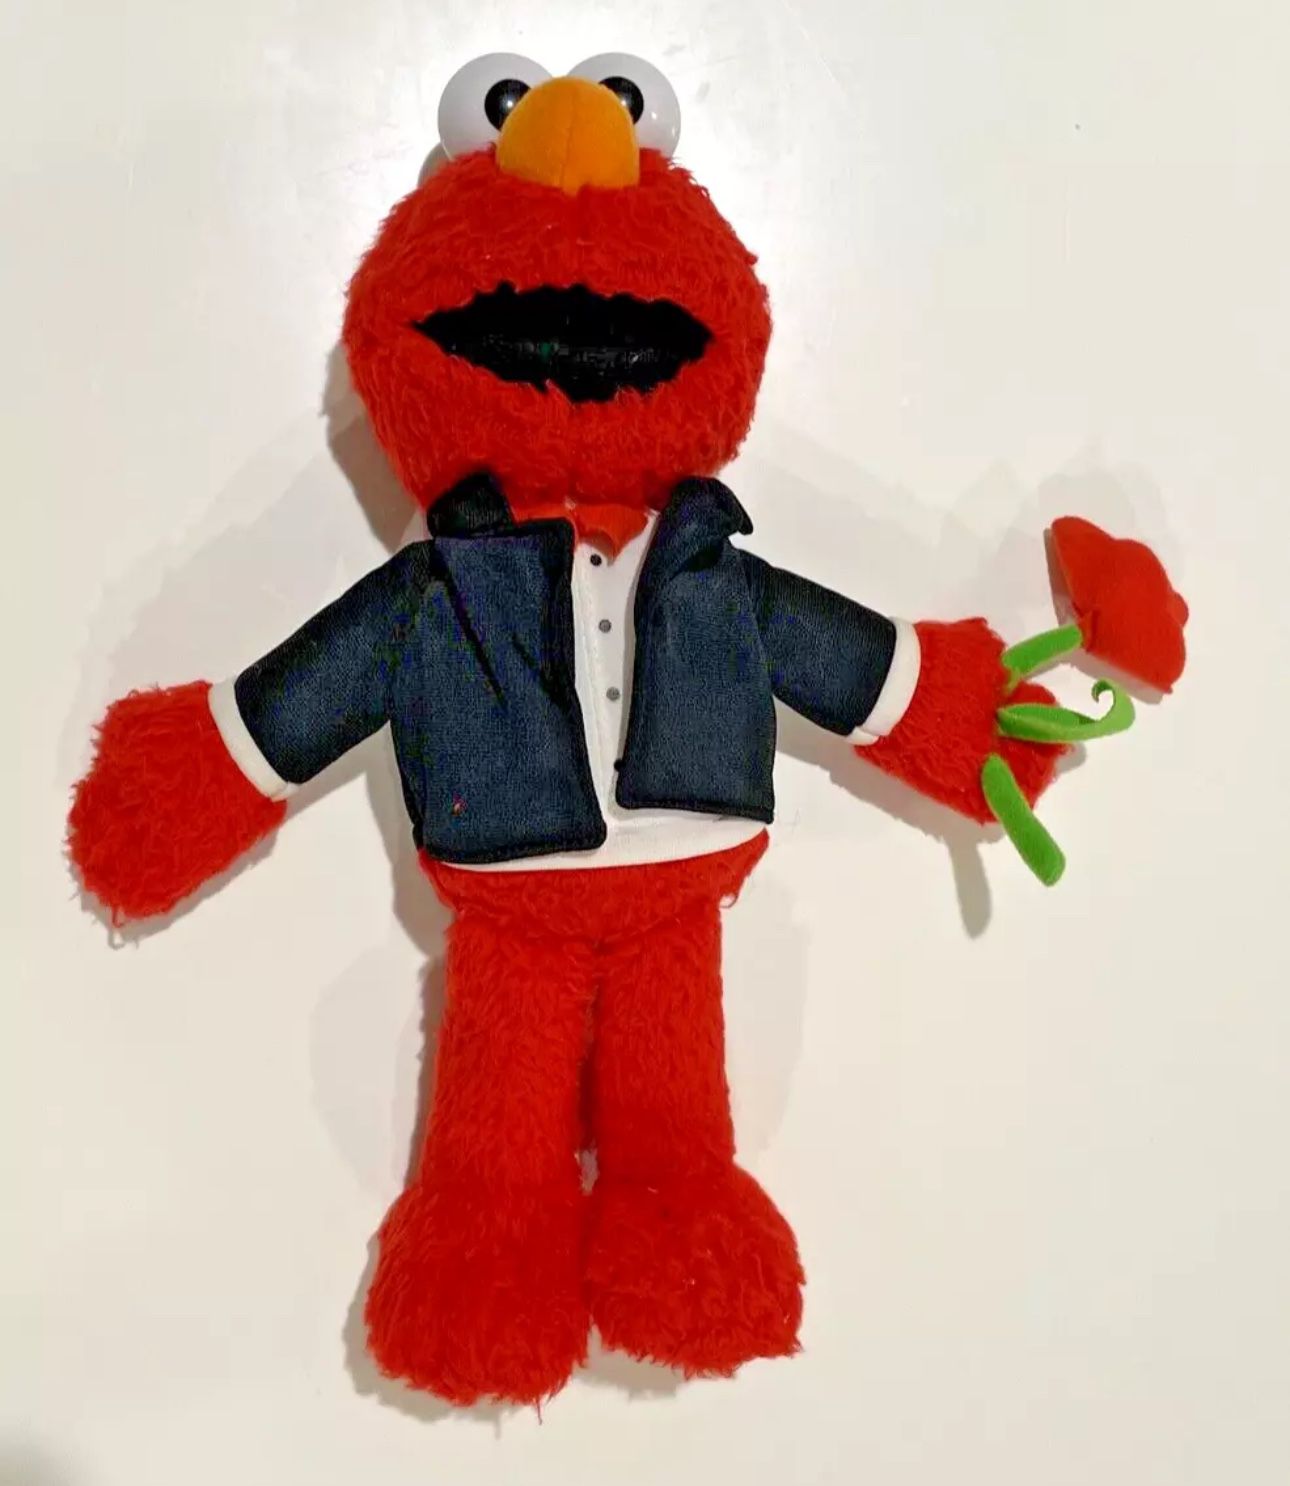 Fisher Price "Elmo Loves You" Talking Stuffed Animal Plush Valentine Flower 2009